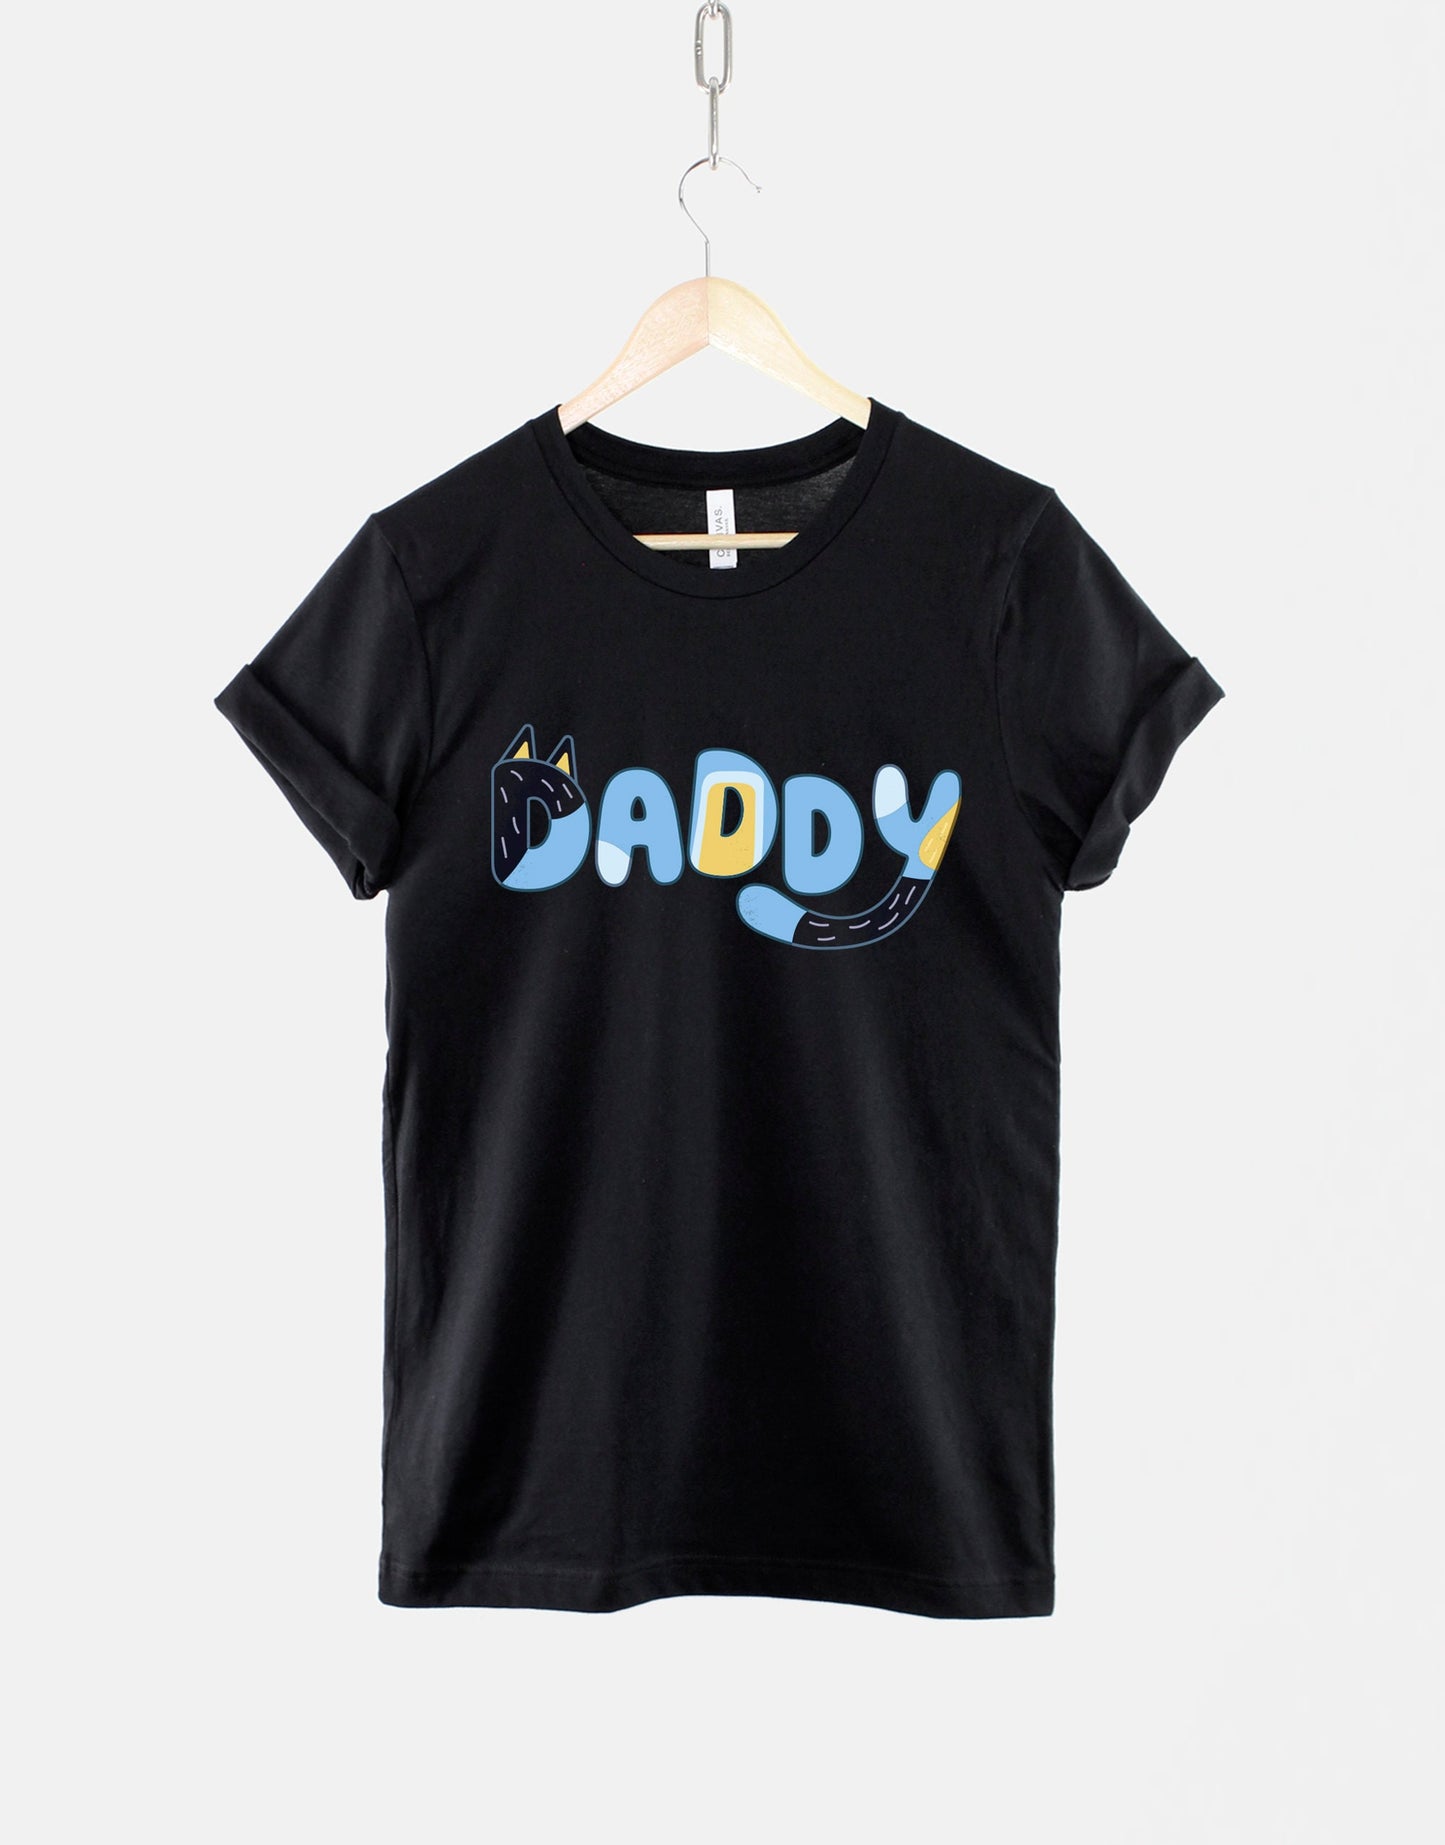 Bluey Dad T-Shirt - Bluey Daddy Shirt - Fathers Day T-Shirt - Dad Life Bluey Shirt - Rad Dad T-Shirt - Dad T-Shirt